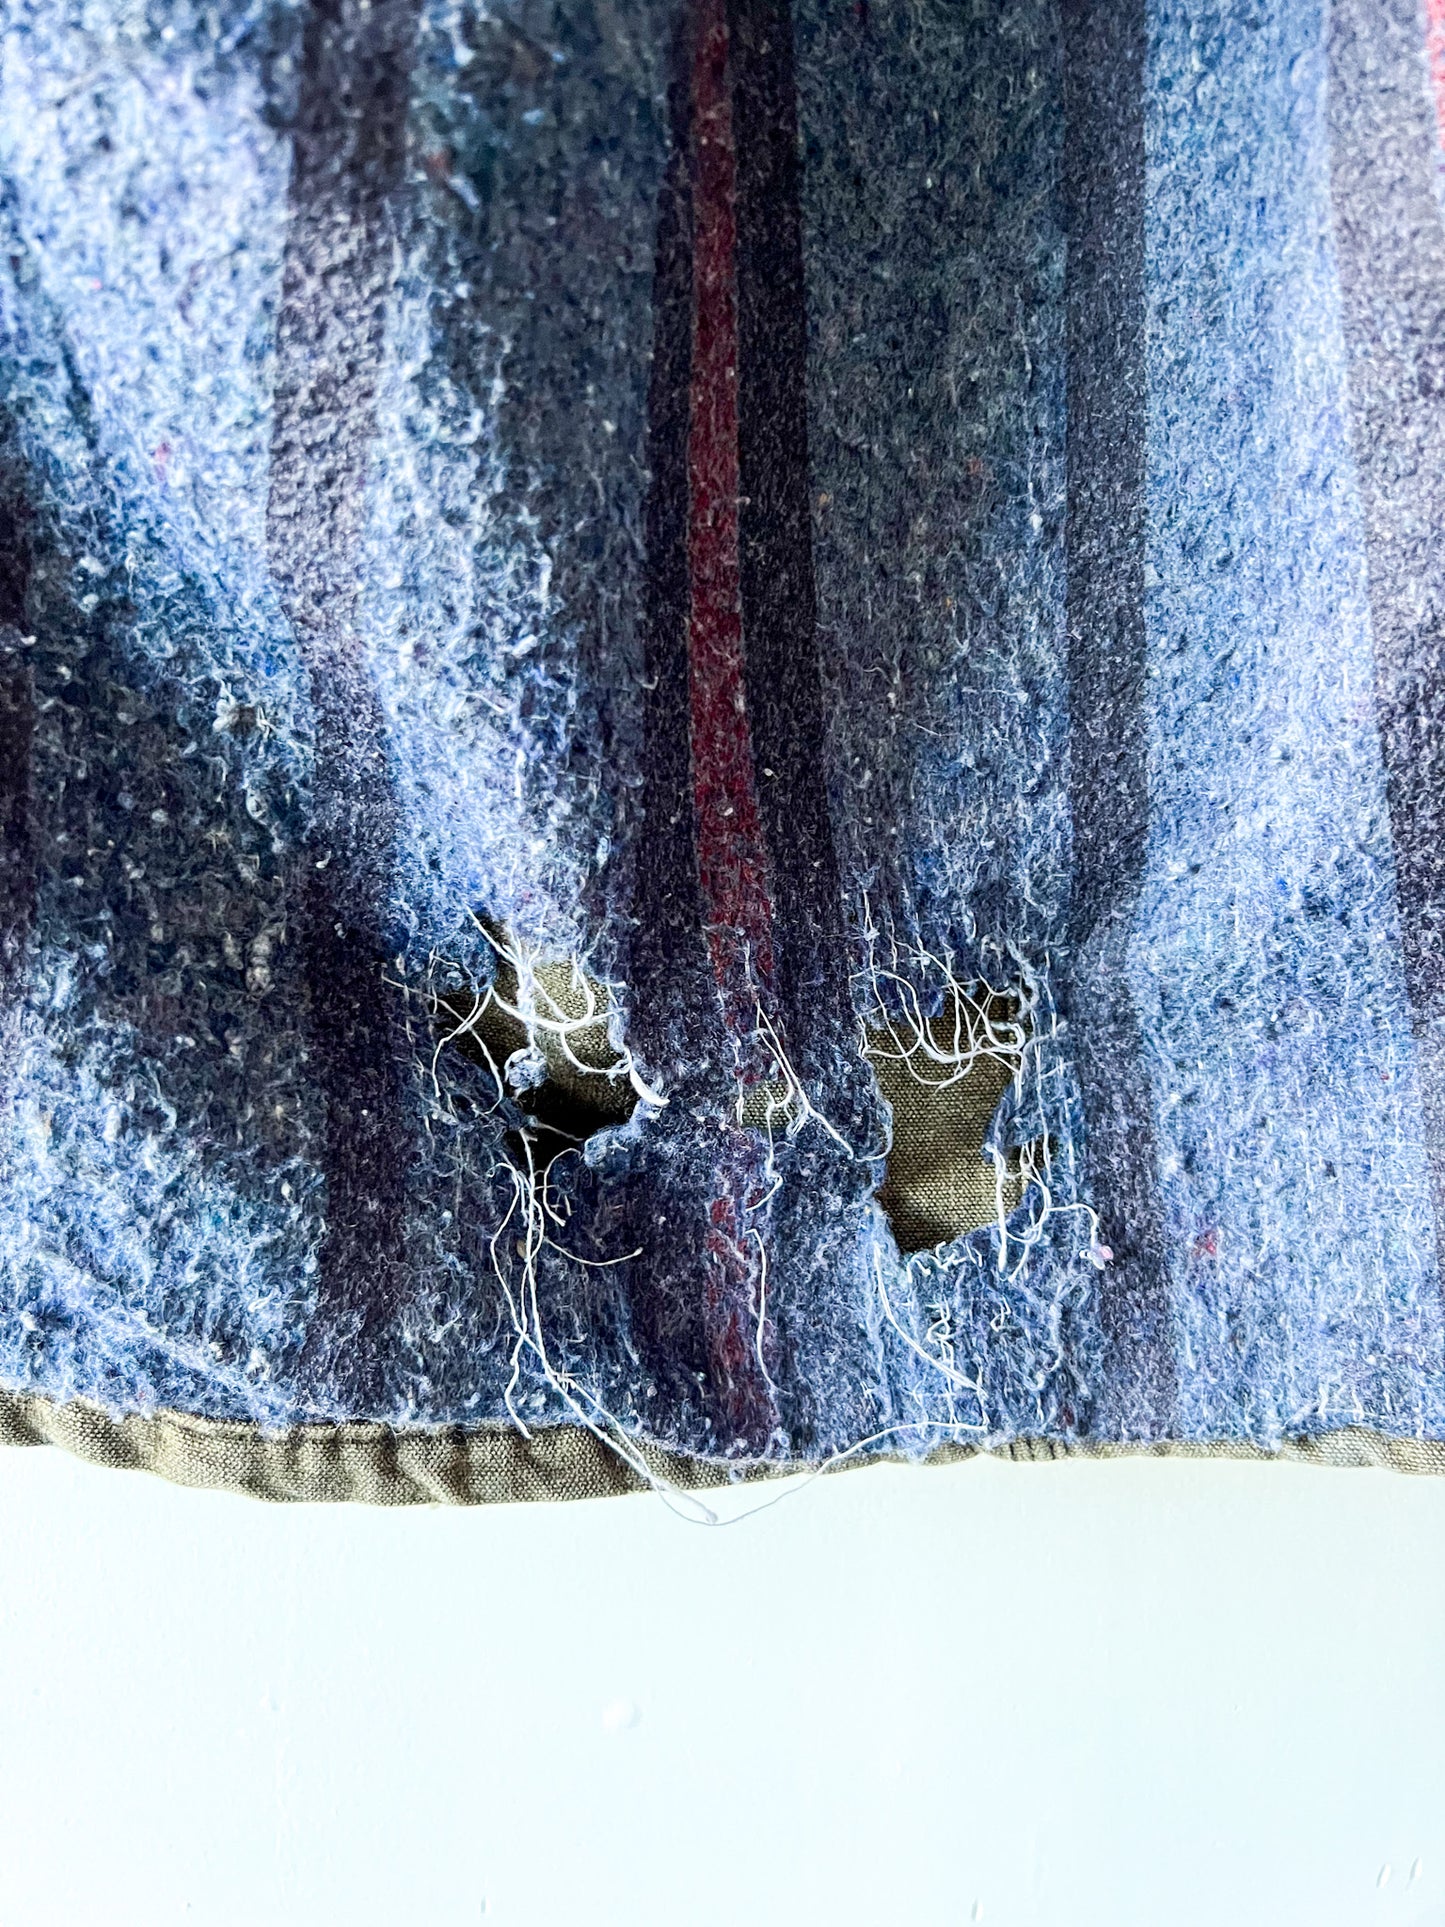 NAPLES - Vintage 90s Carhartt Acid Washed Blanket Lined Chore Coat - Taupe, Gray - Unisex Medium